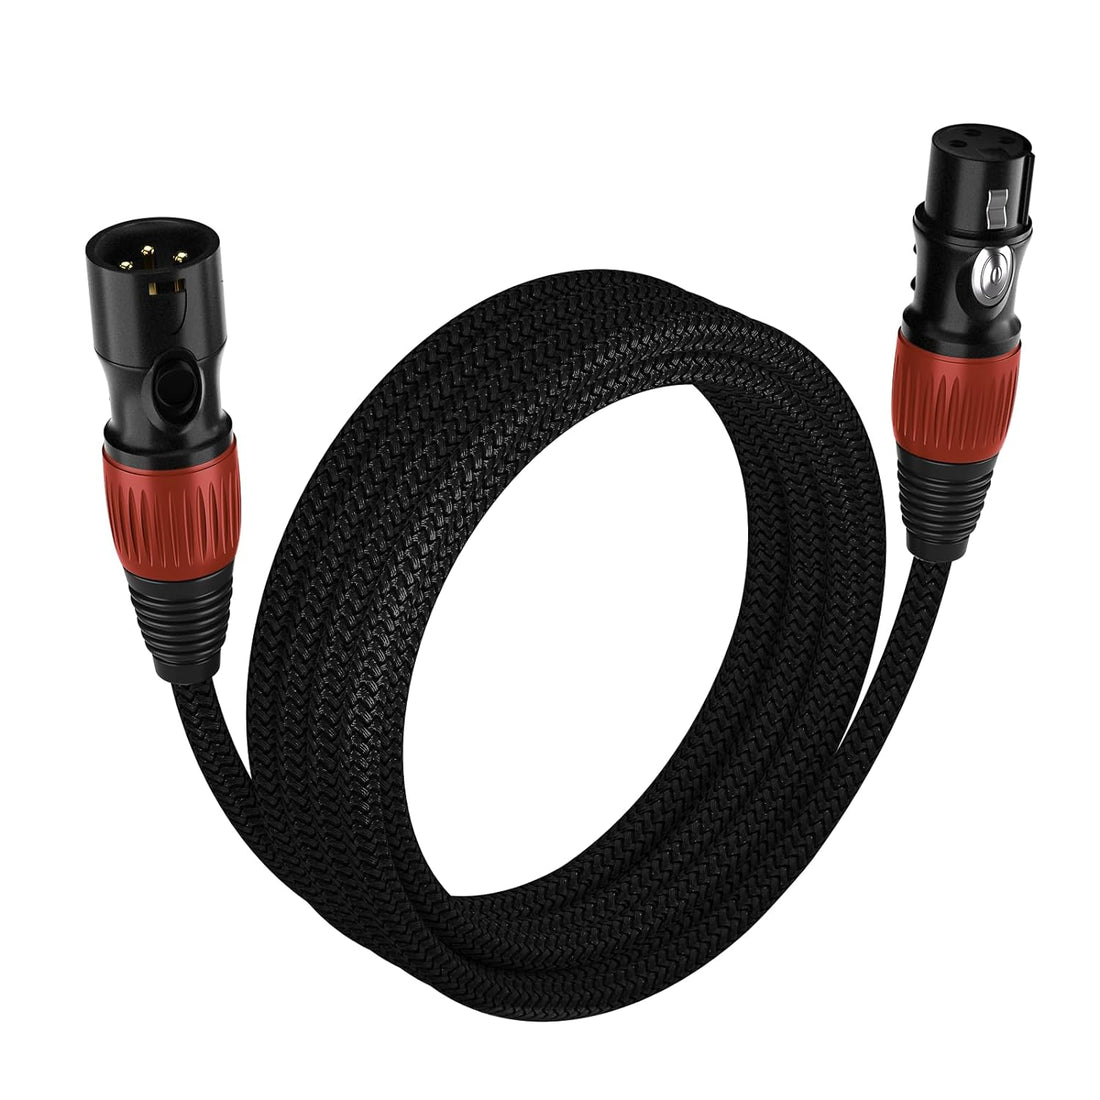 BRIDGEE XLR Microphone Cables (16ft),Braided Premium Balanced XLR Cable 3-Pin Male to Female